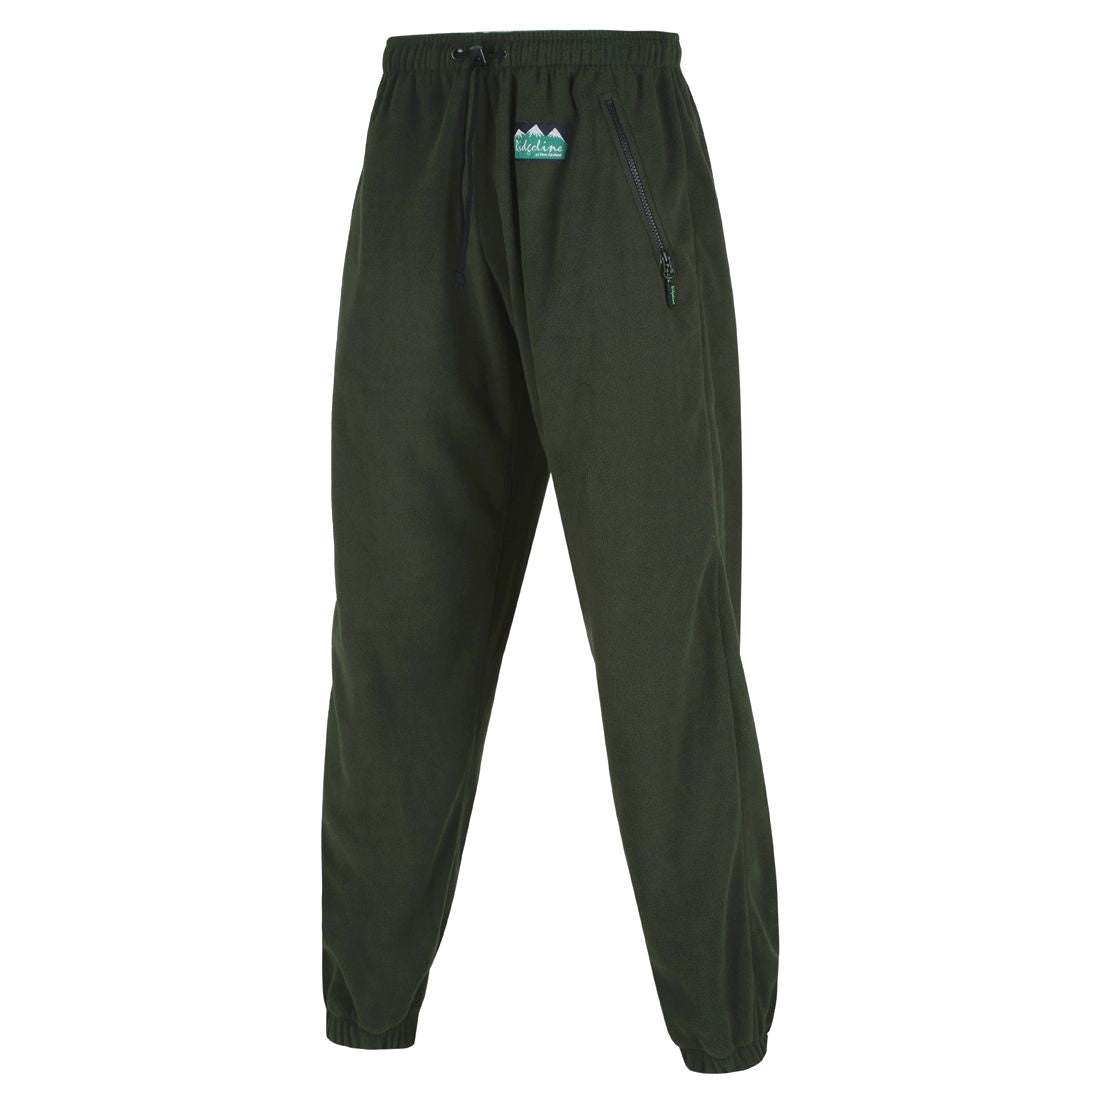 Front view of Ridgeline Staydry Micro Fleece Pants in Olive Green